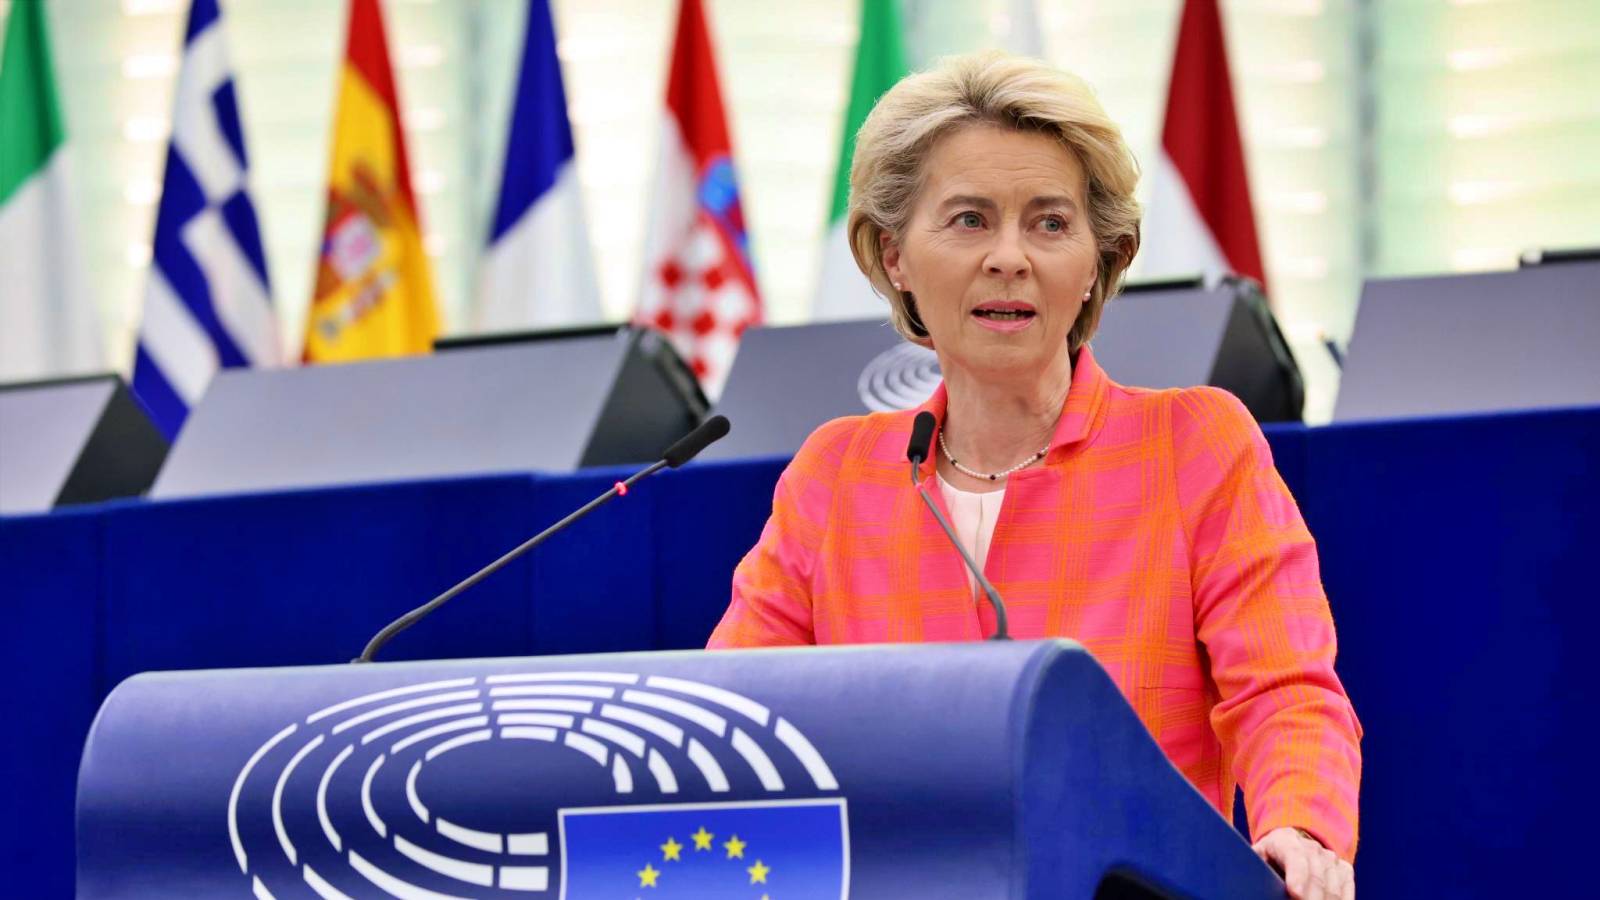 Ursula Von der Leyen Vom Ajuta Ucraina pentru Oricat Timp va fi Nevoie